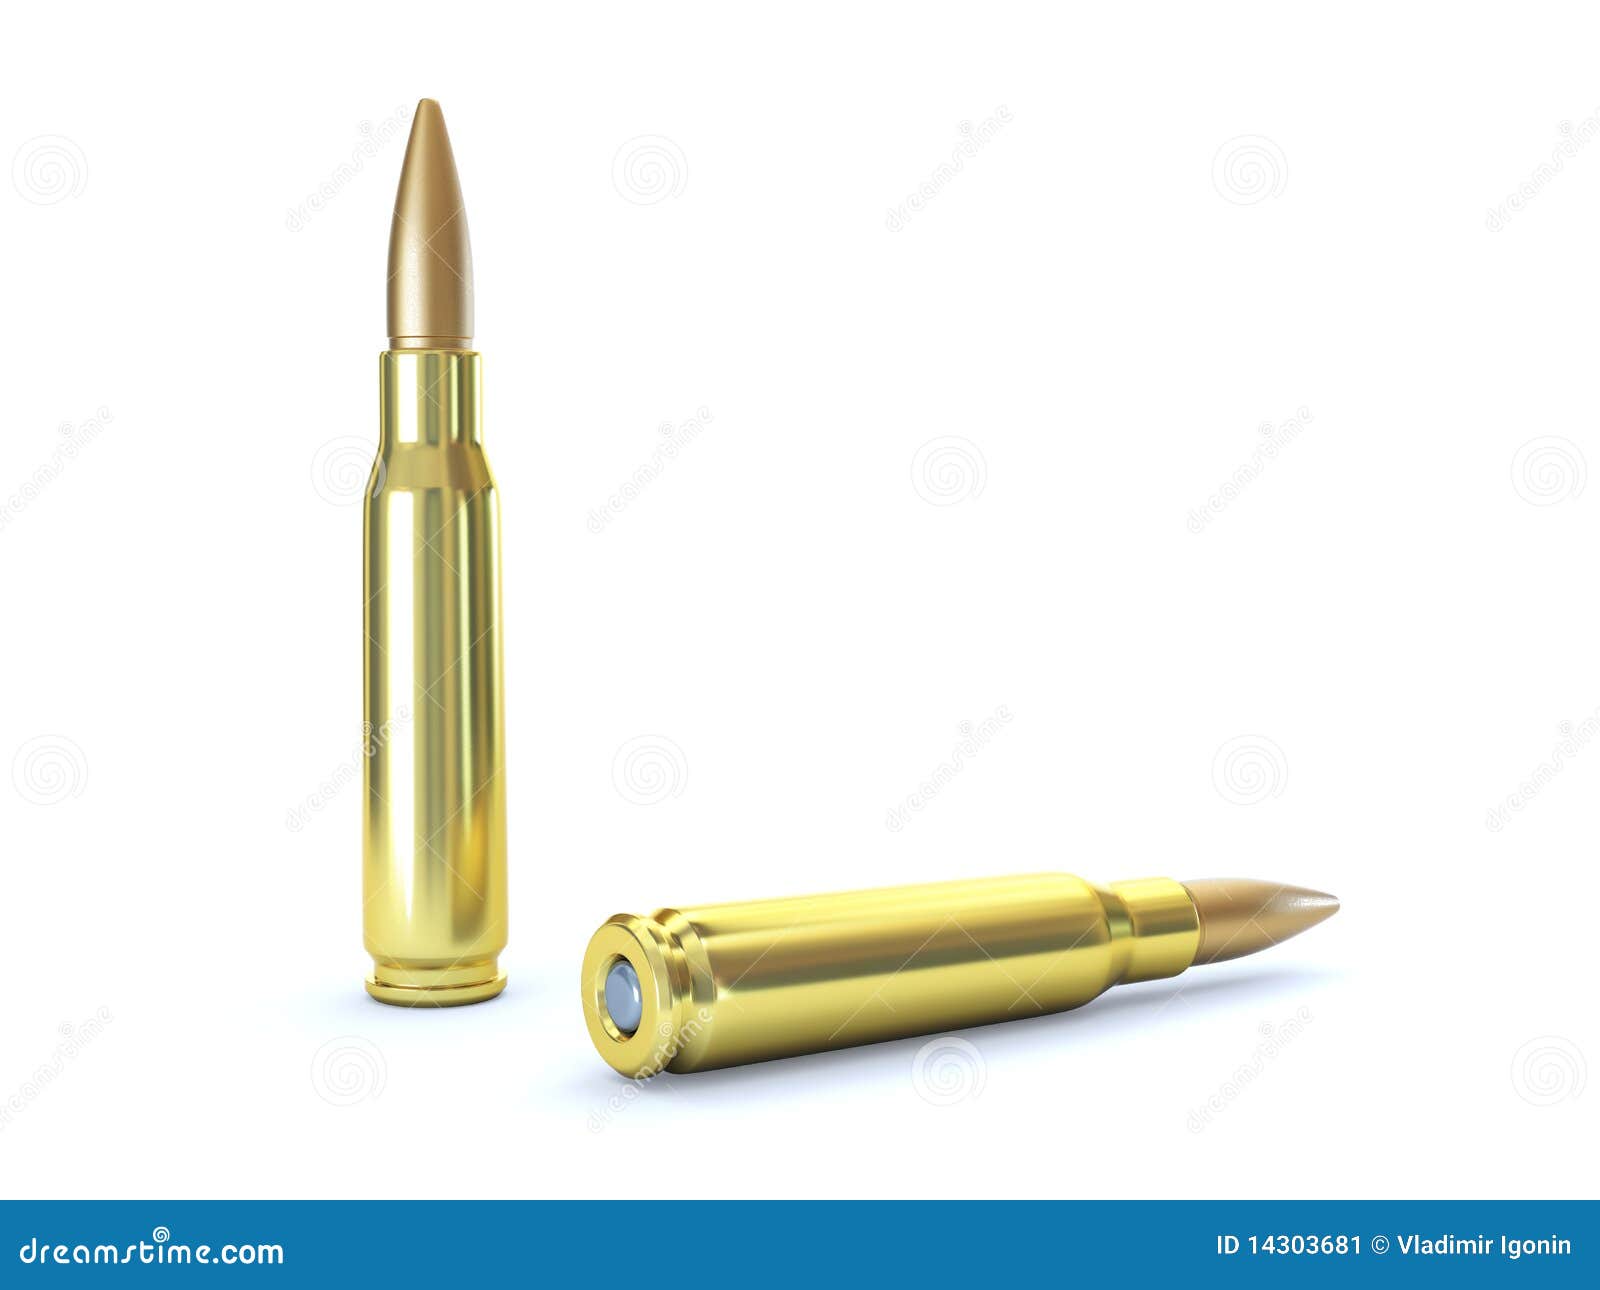 bullet cartridge